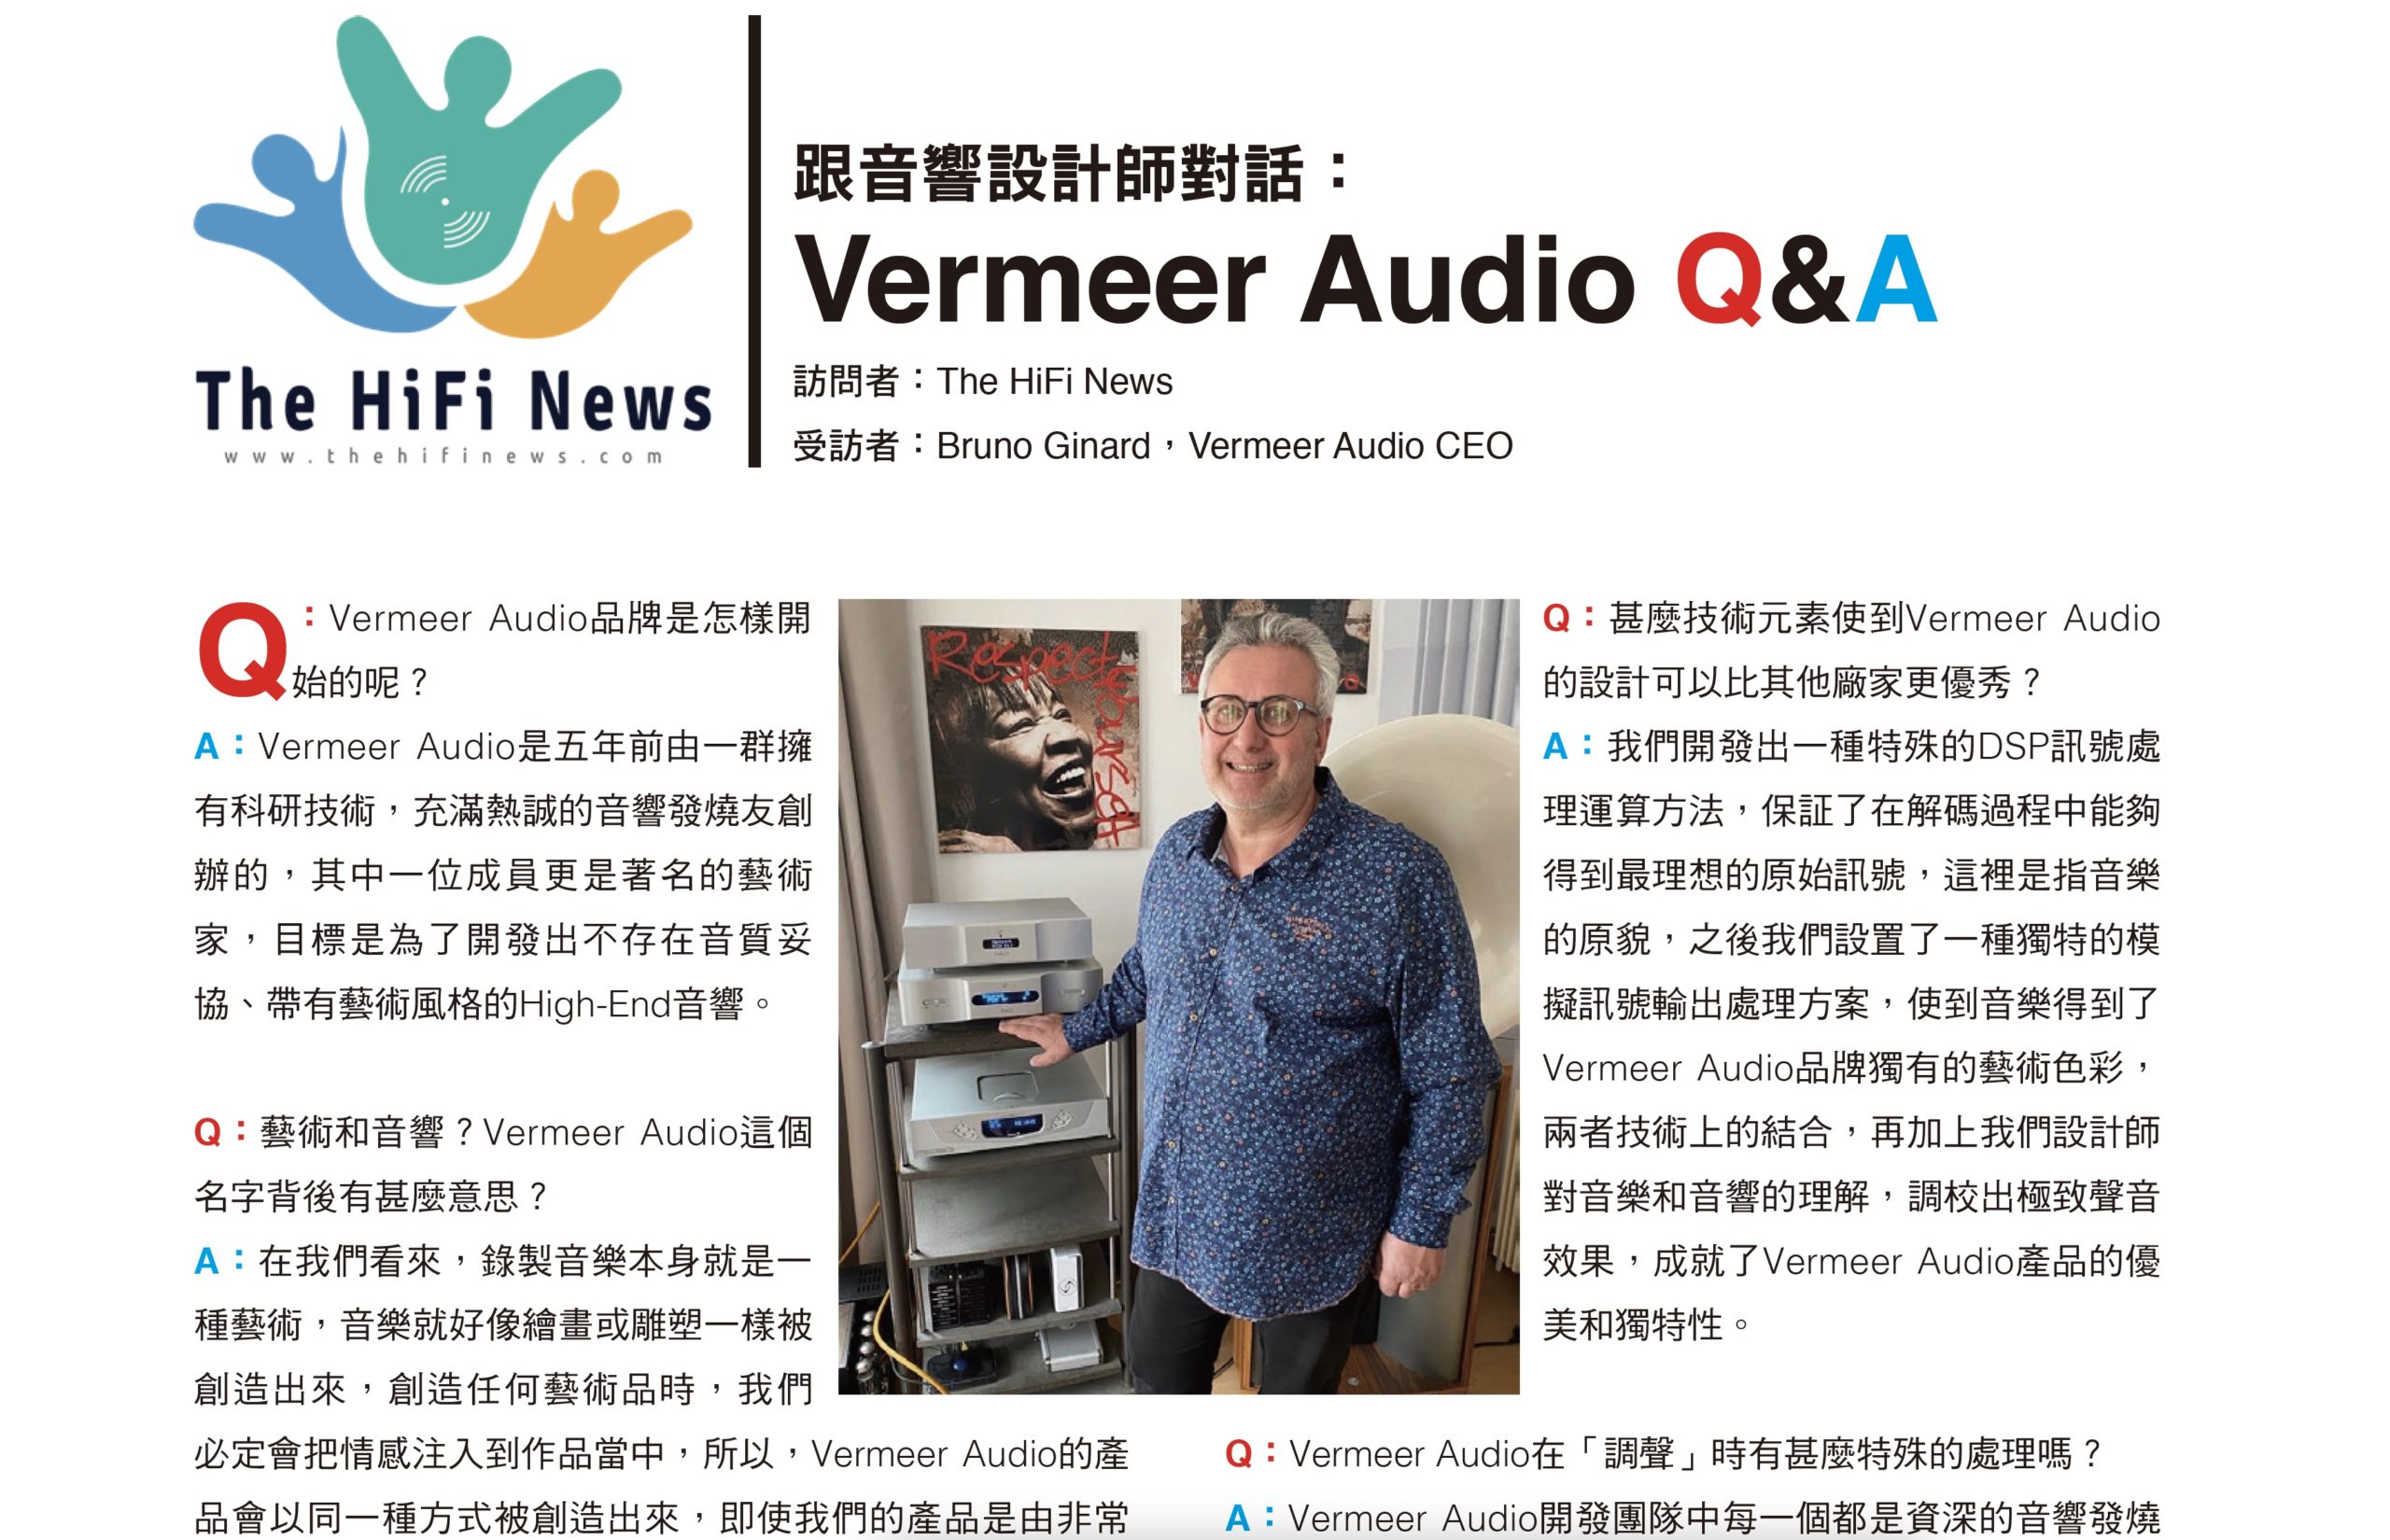 Vermeer Audio Q&A — The Hifi News